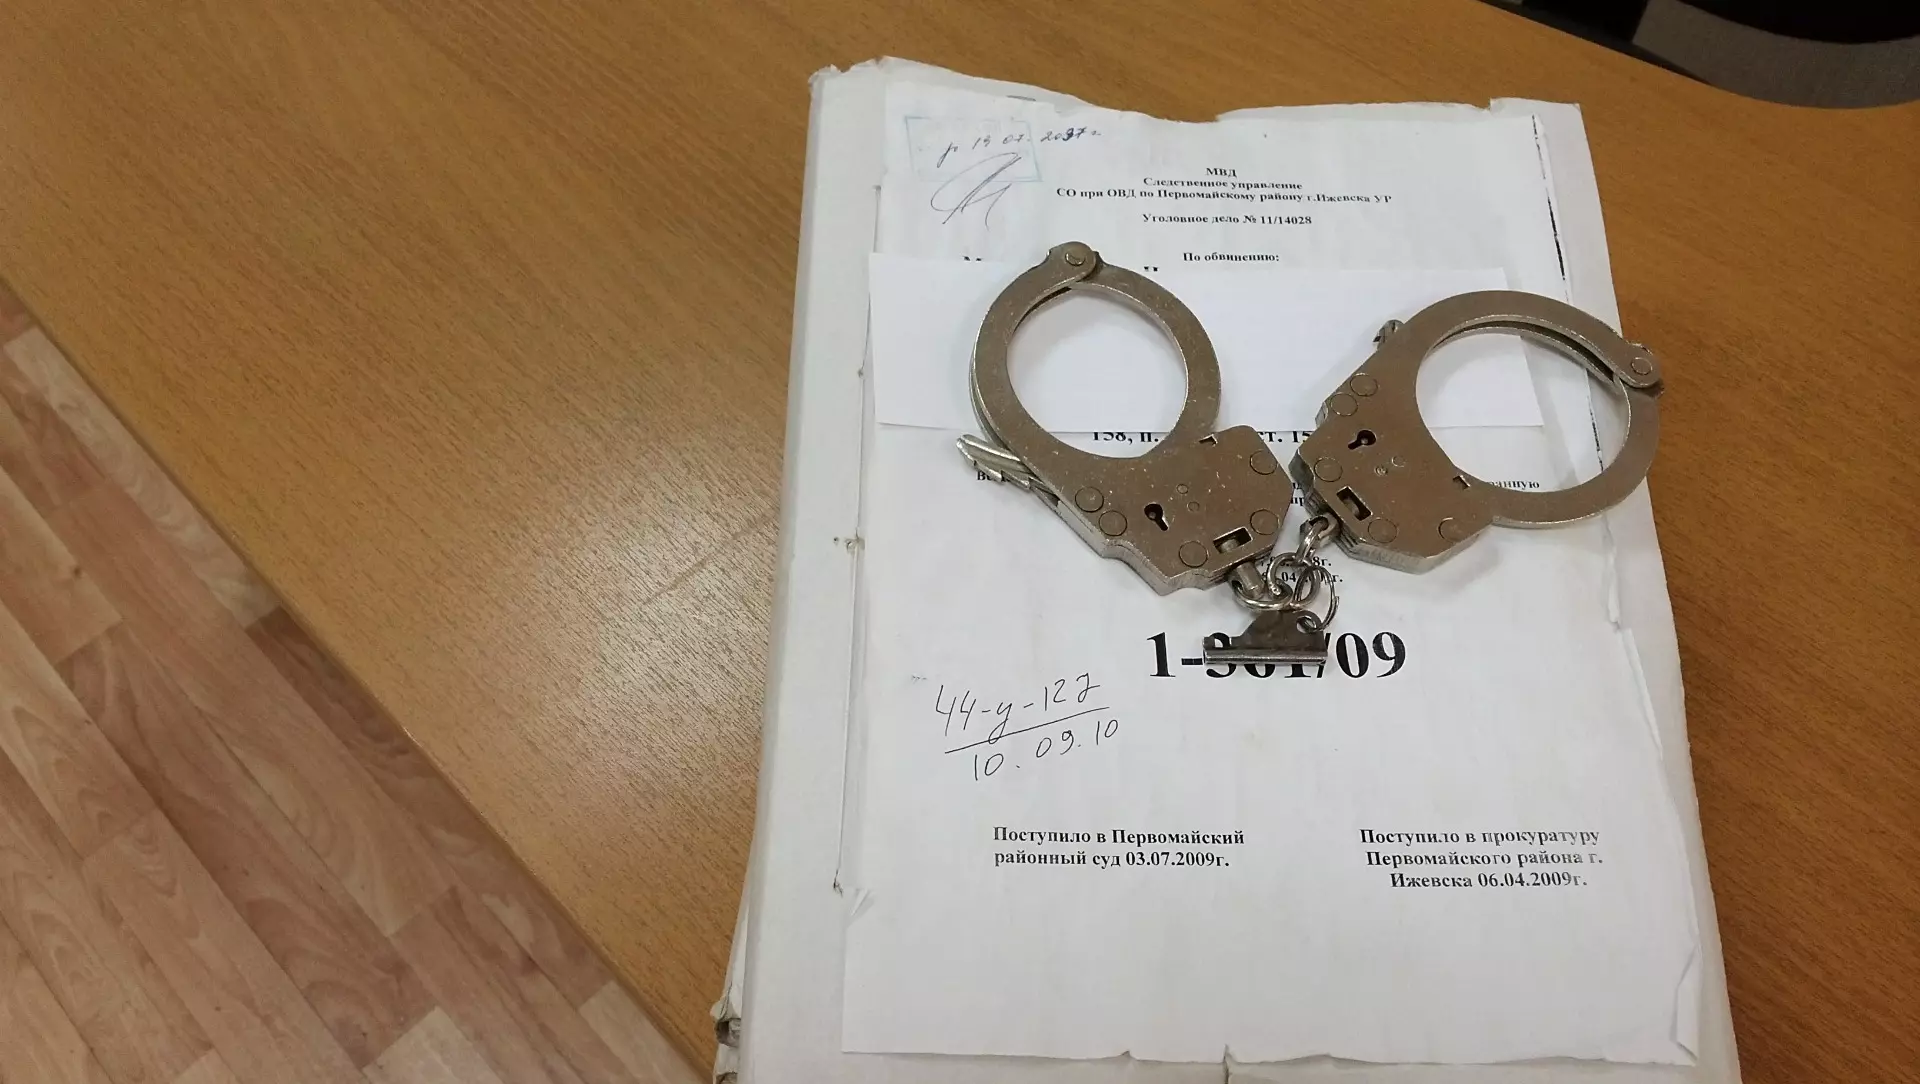 Оренбуржца изнасиловали в Москве